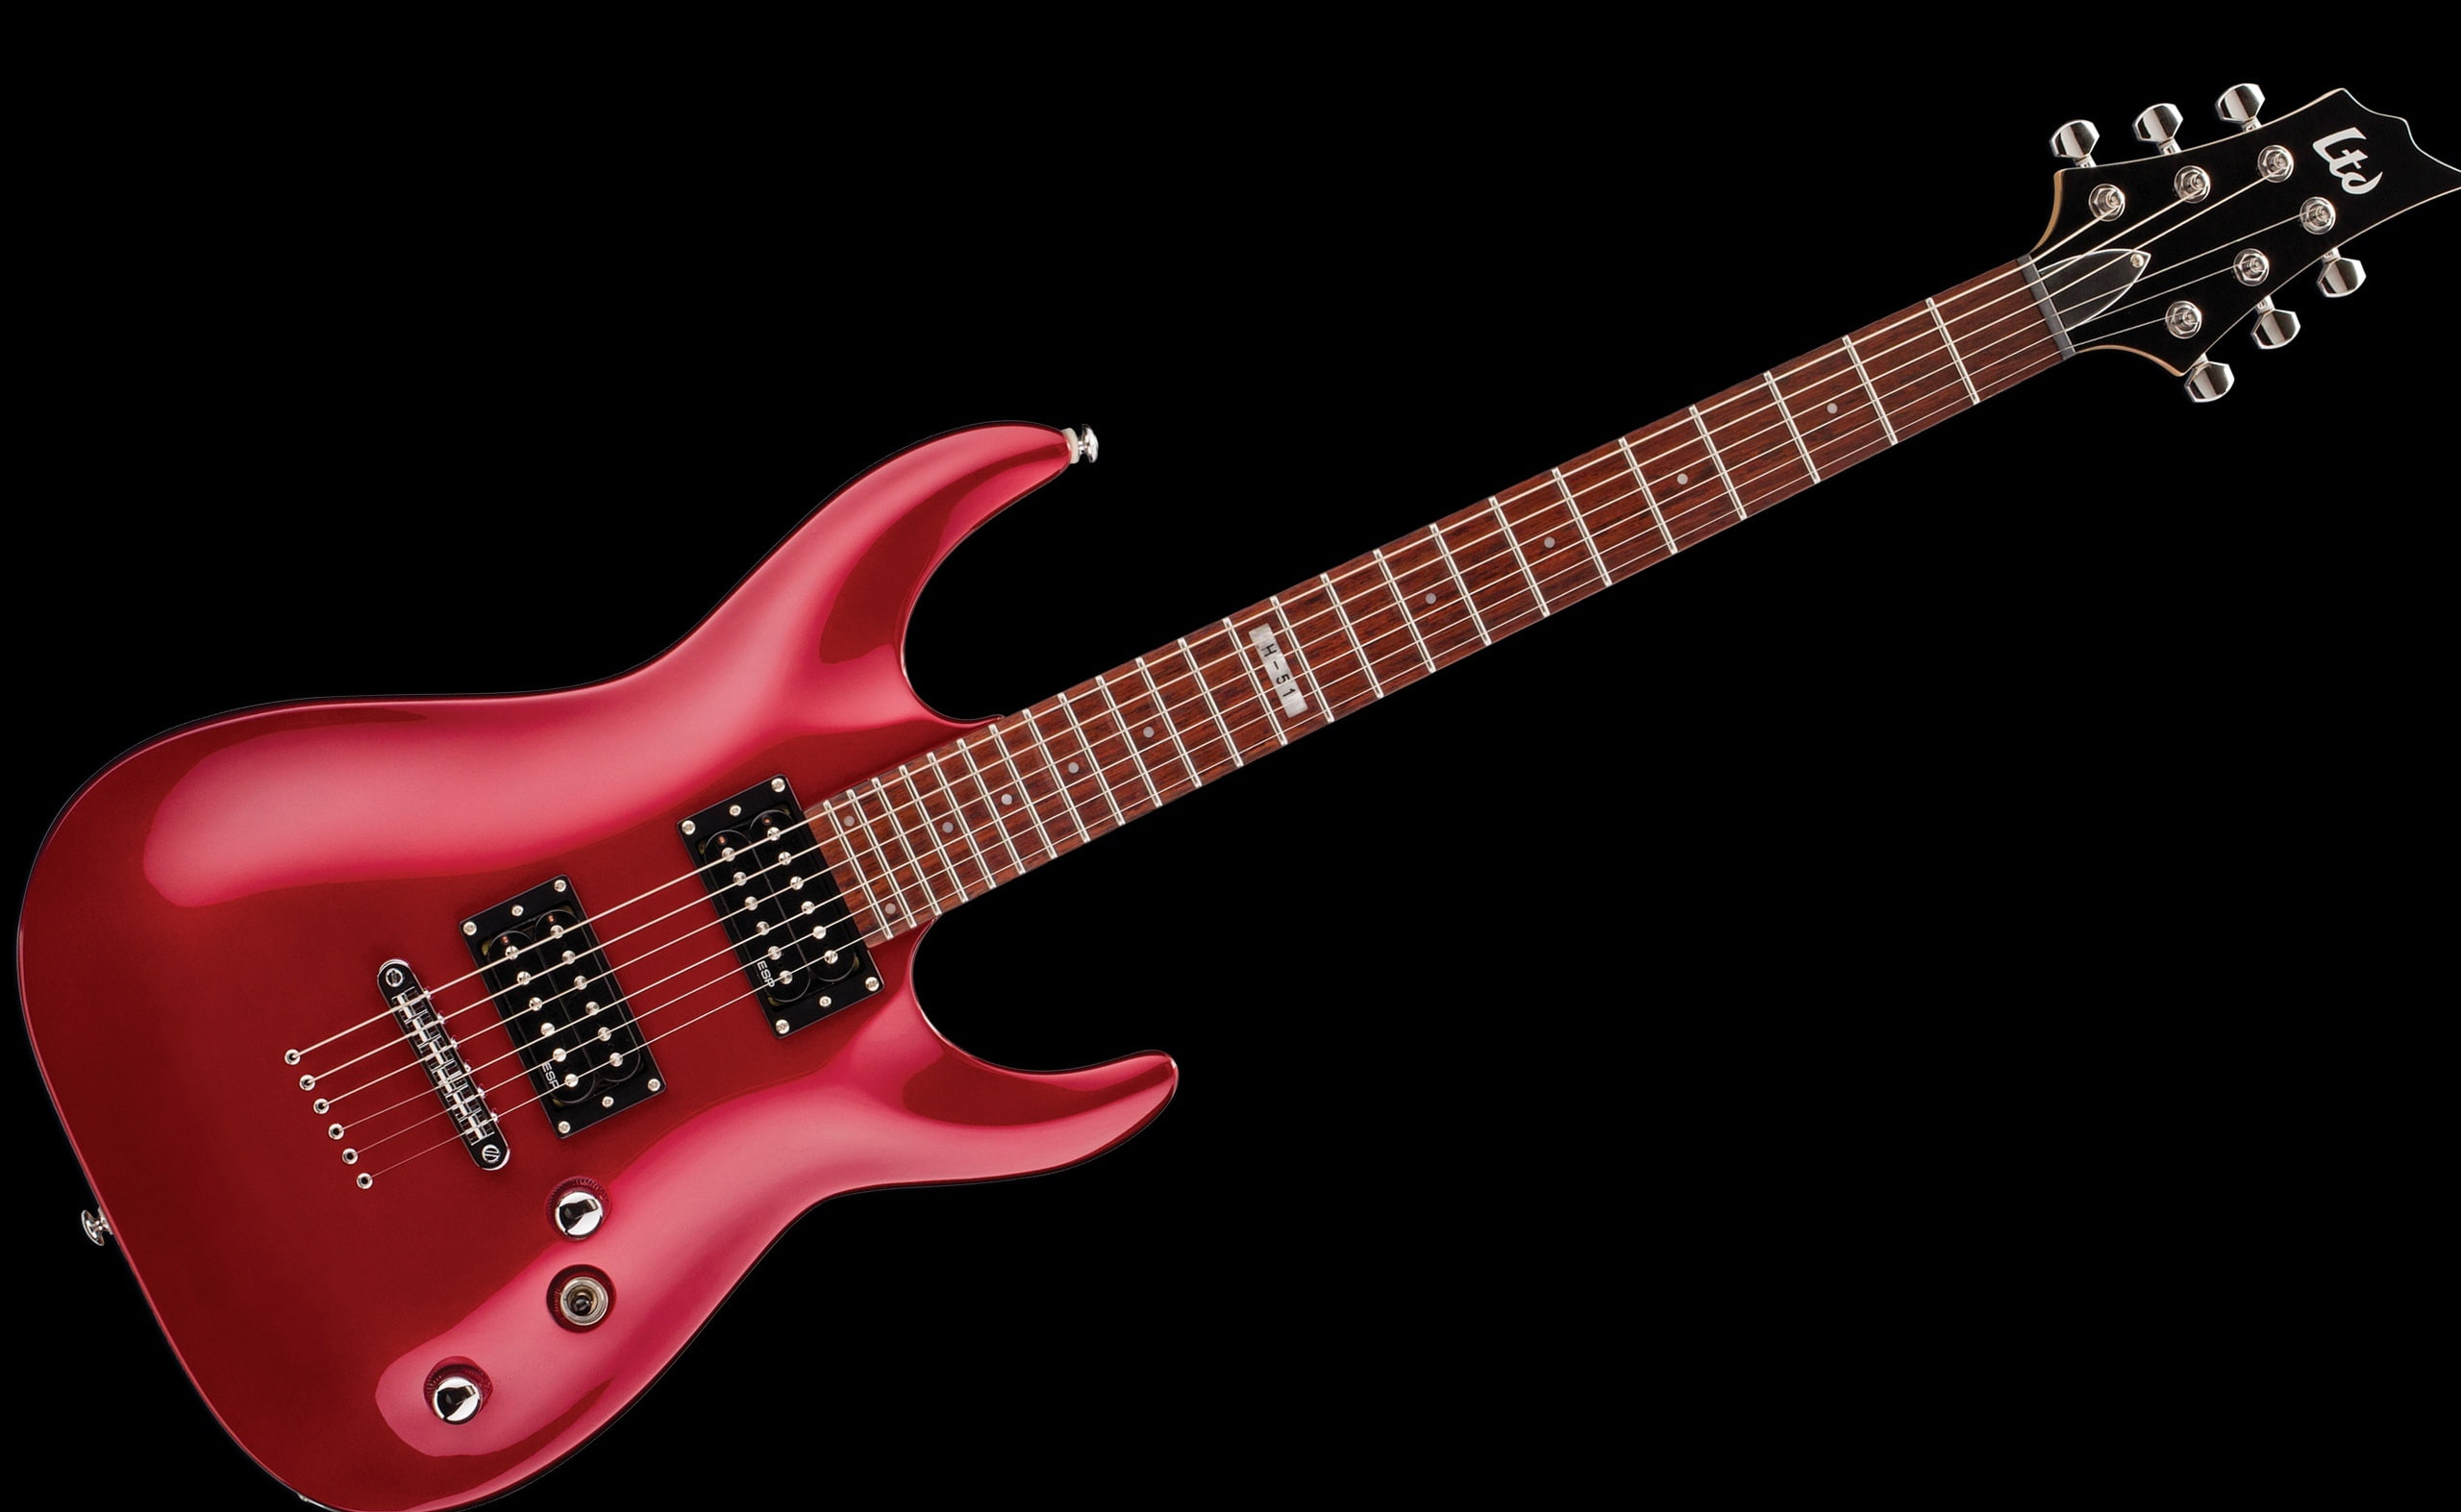 Red Electric Guitar, Music, Rock, Design, Cool, instrument, blackbackground